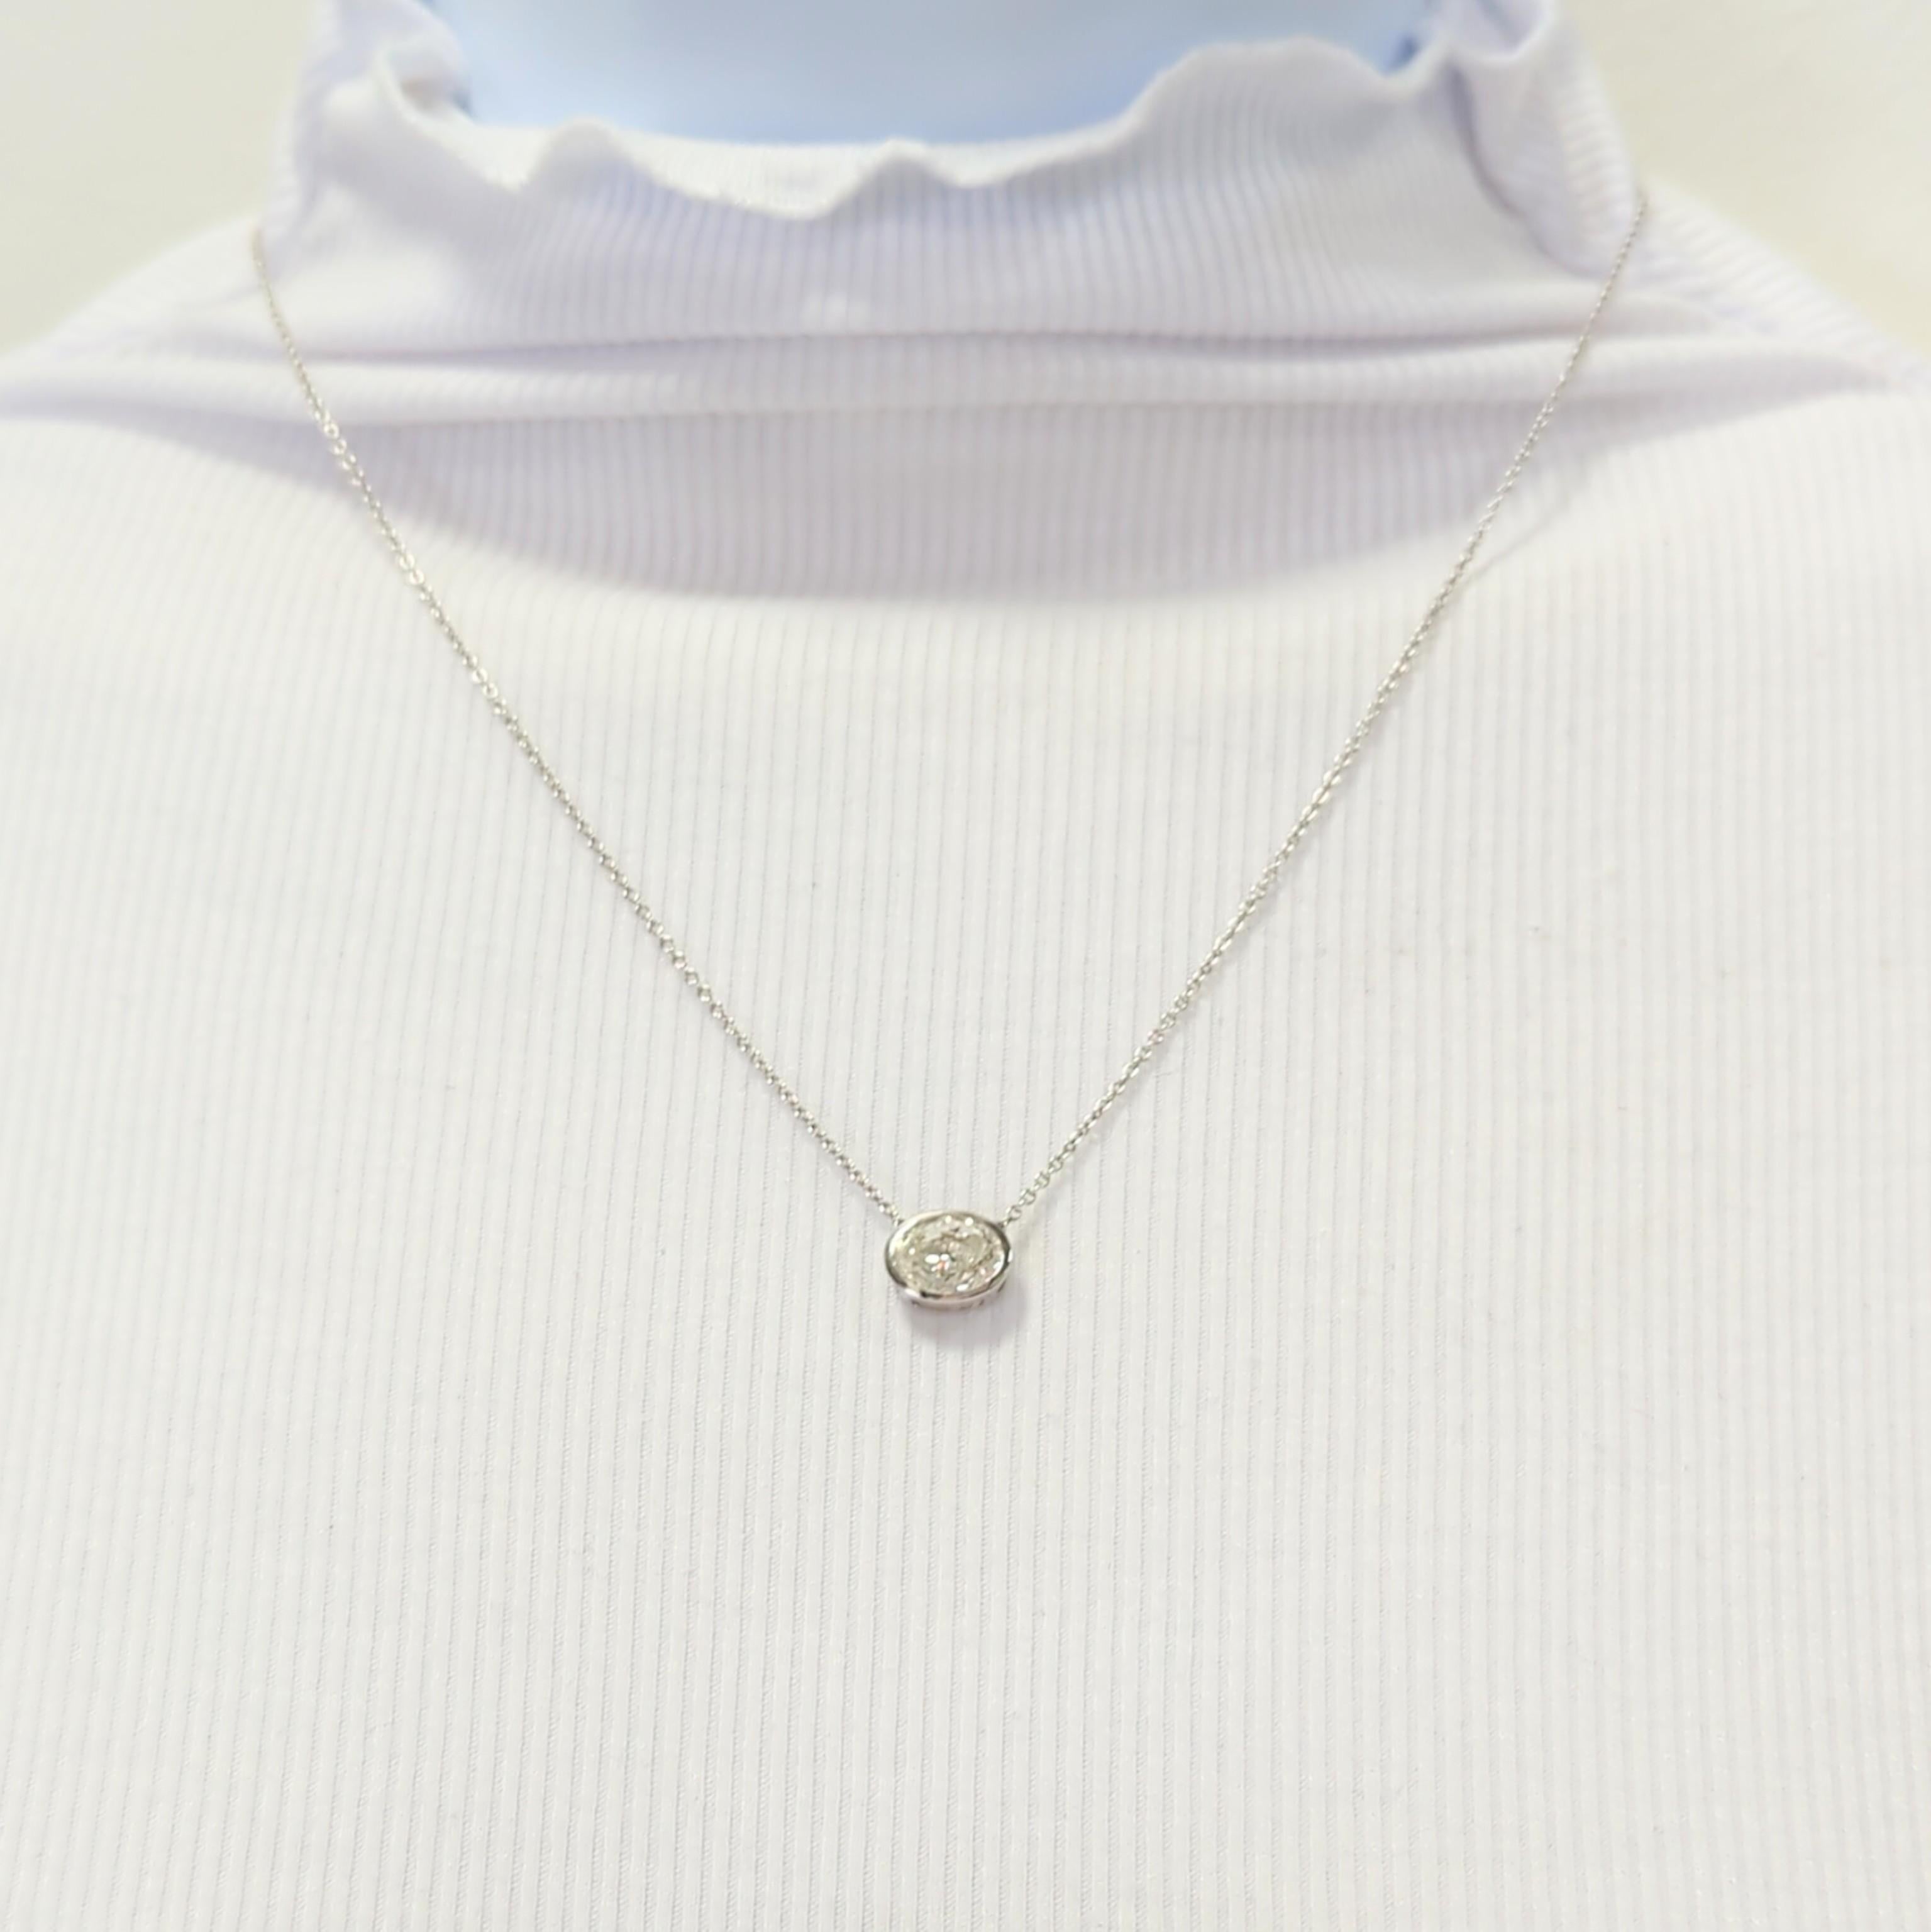 Gorgeous 2.01 ct. I SI2 oval white diamond in a handmade 18k white gold bezel pendant.  Length is 18.5